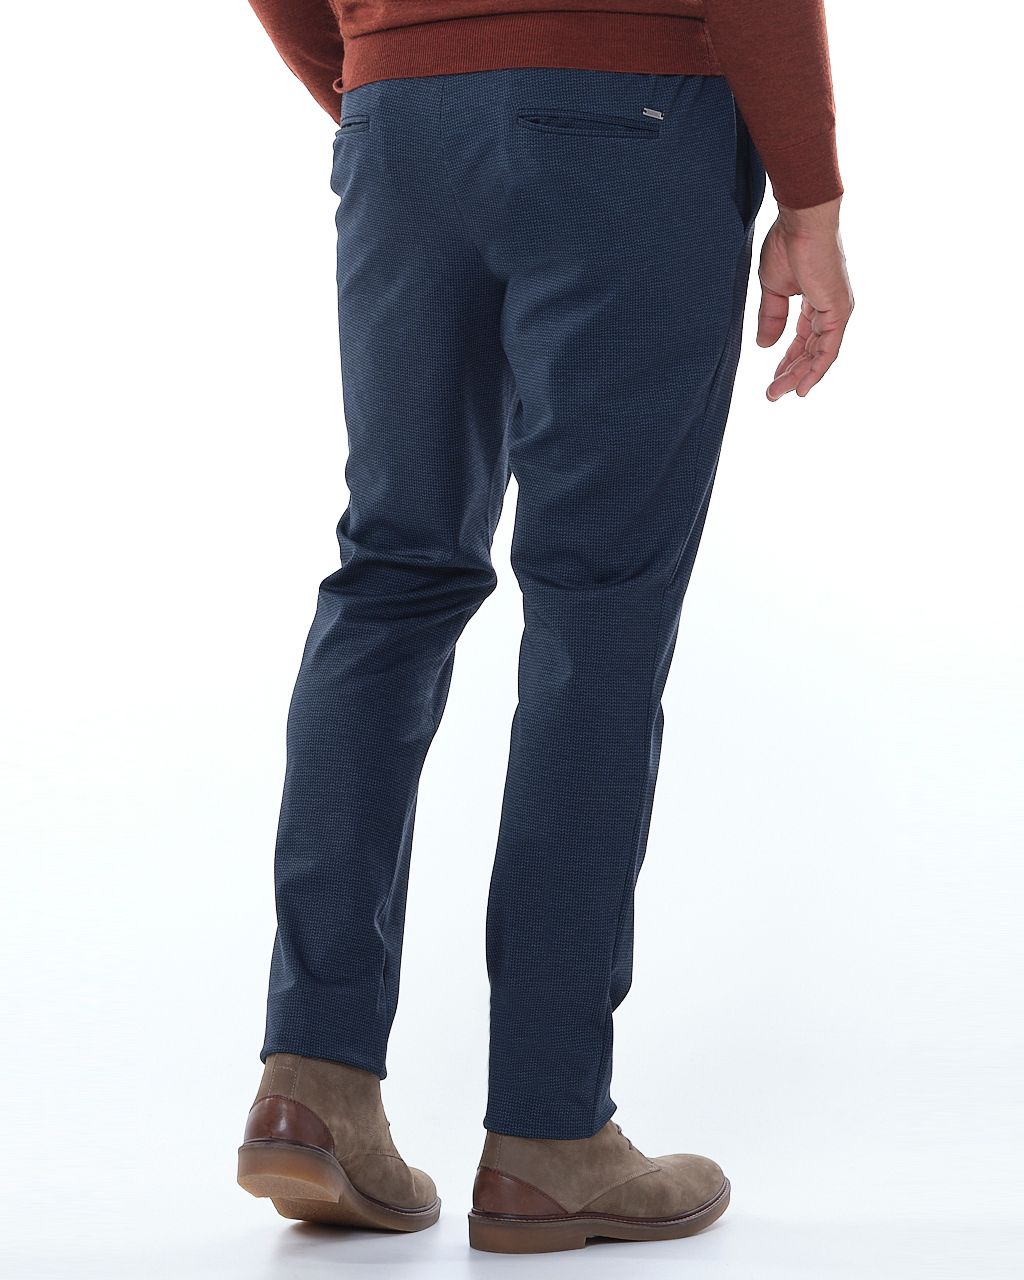 Campbell Classic Usuain Pantalon Donkerblauw print 070169-002-30/34